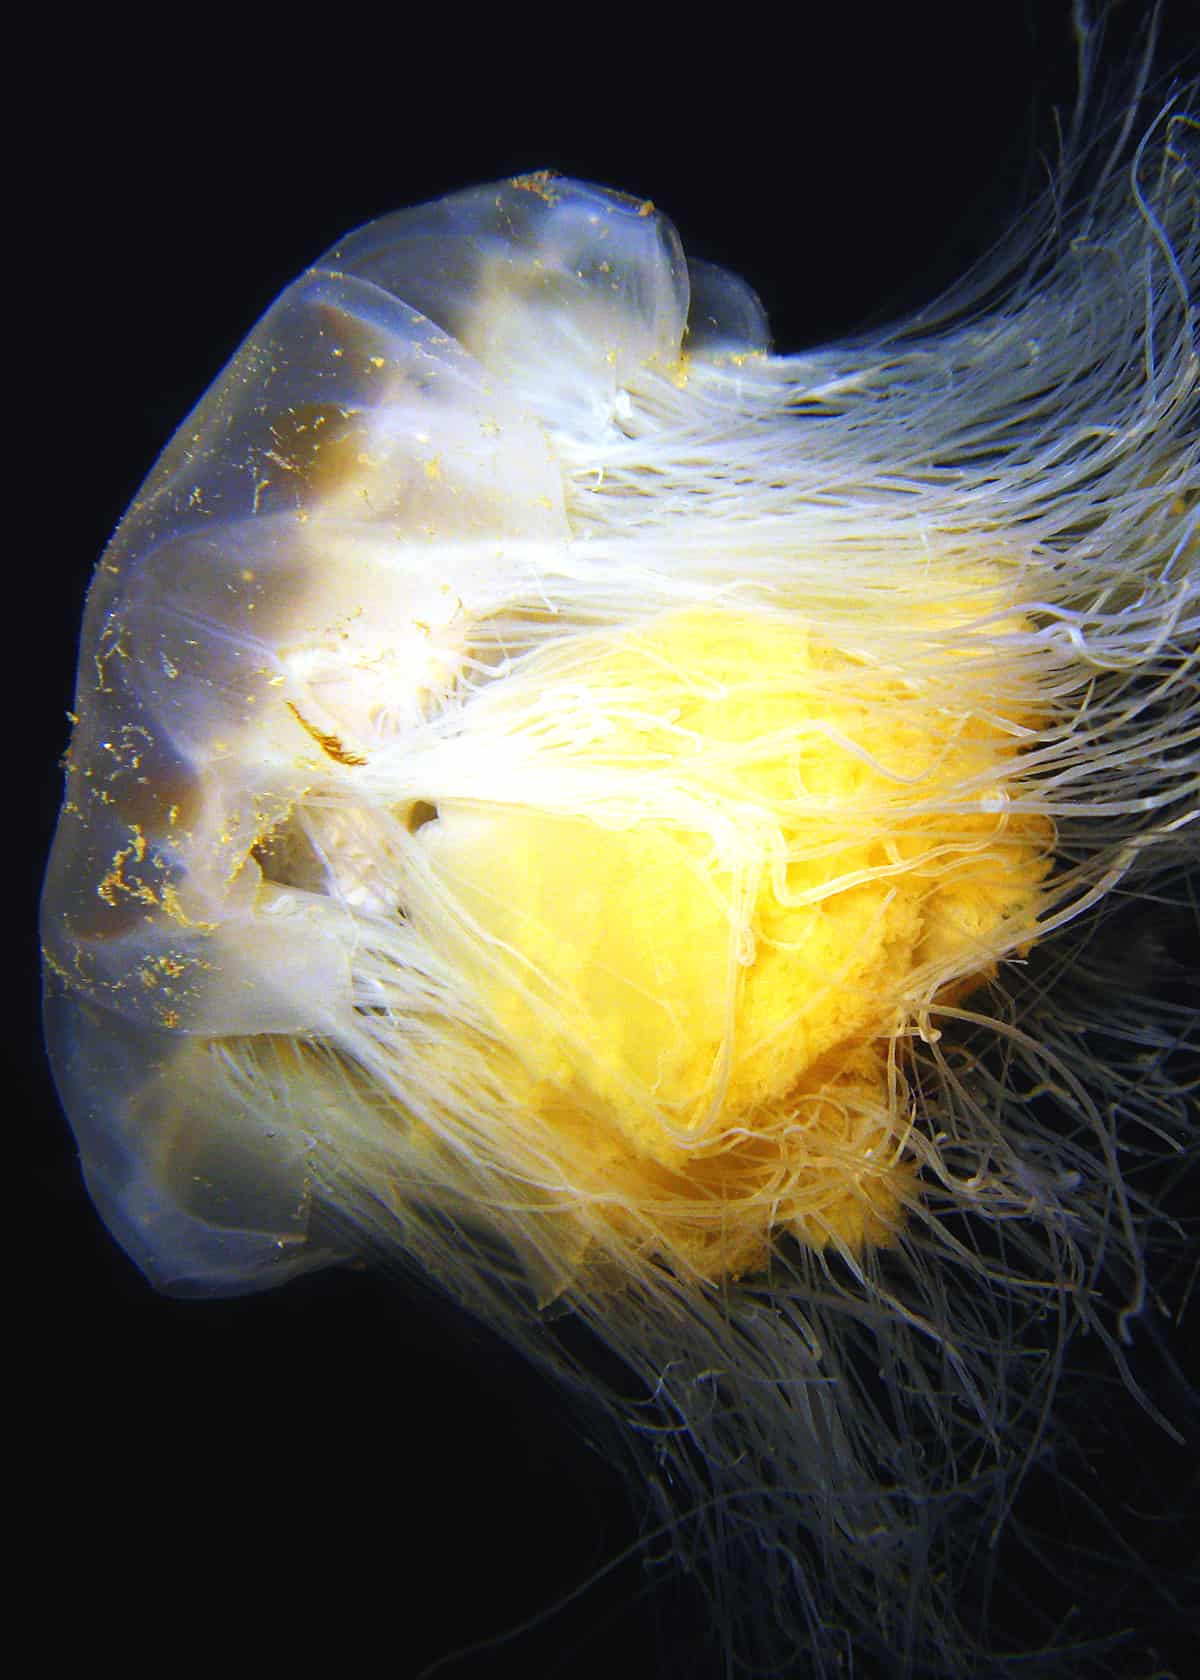 Lion's mane jellyfish